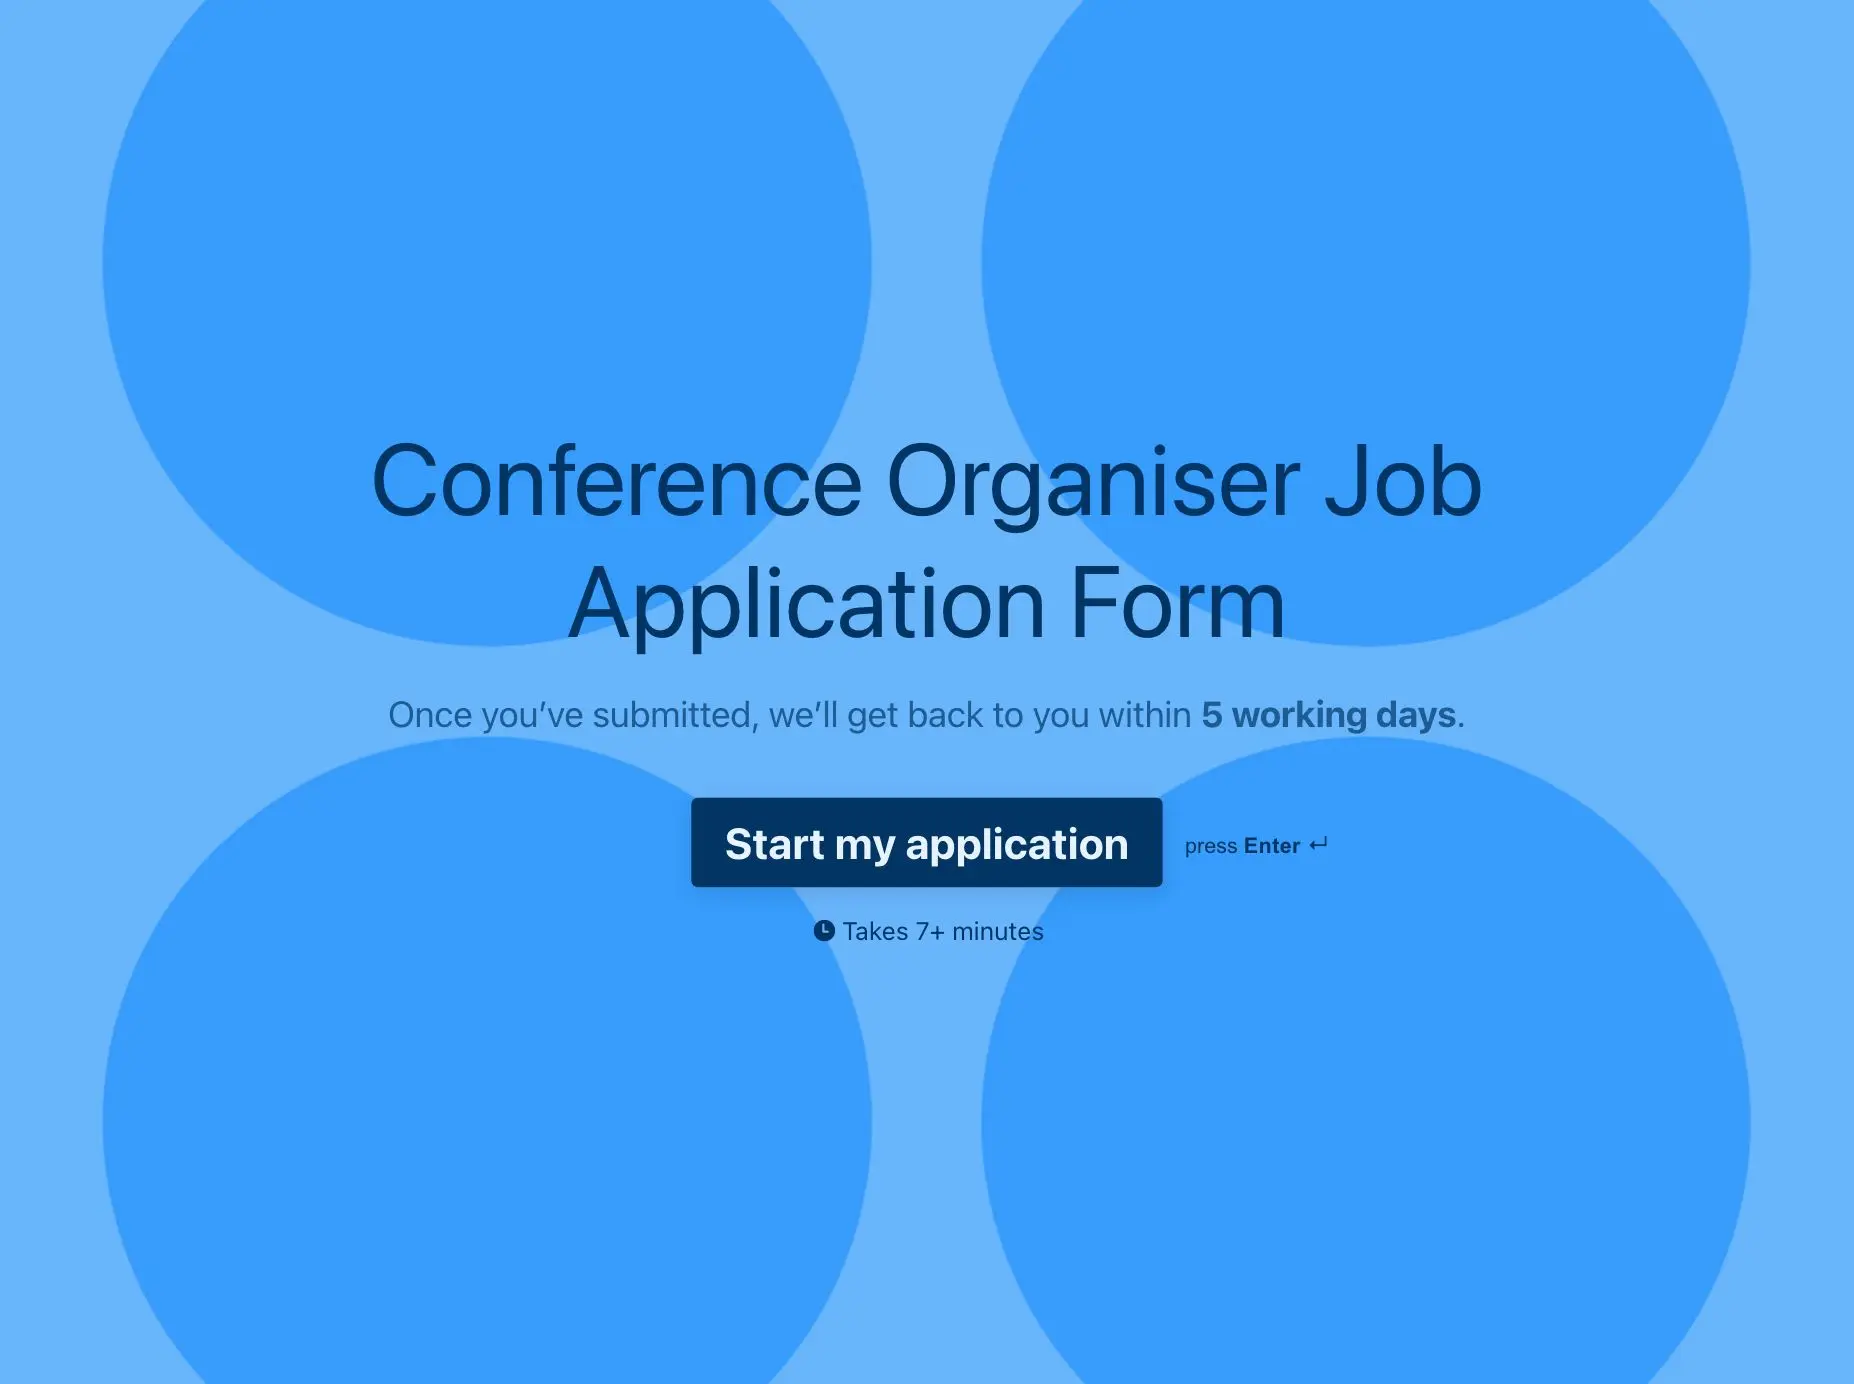 Conference Organiser Job Application Form Template Hero